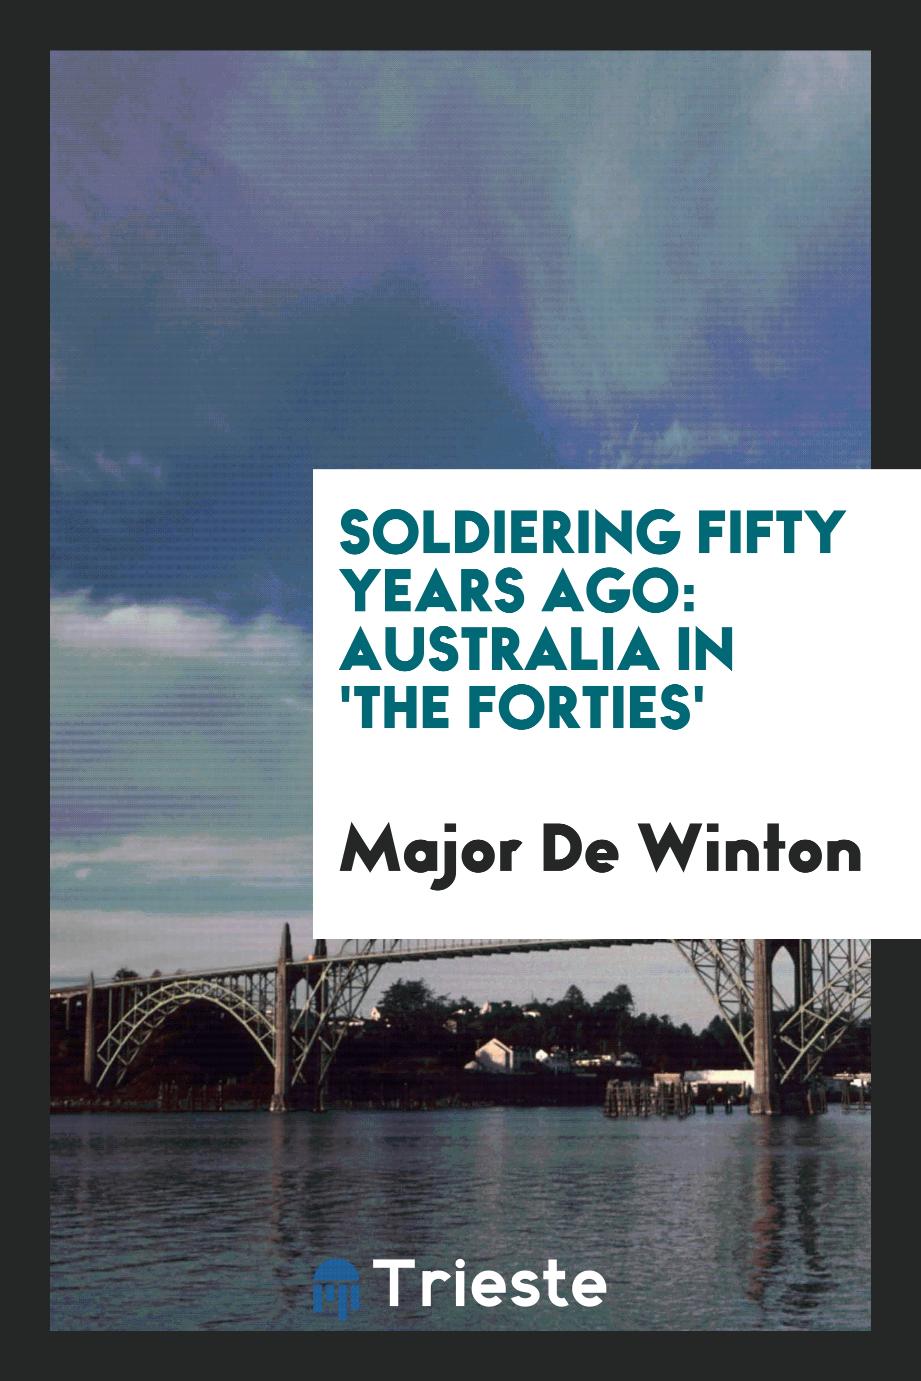 Major De Winton - Soldiering Fifty Years Ago: Australia in 'The Forties'